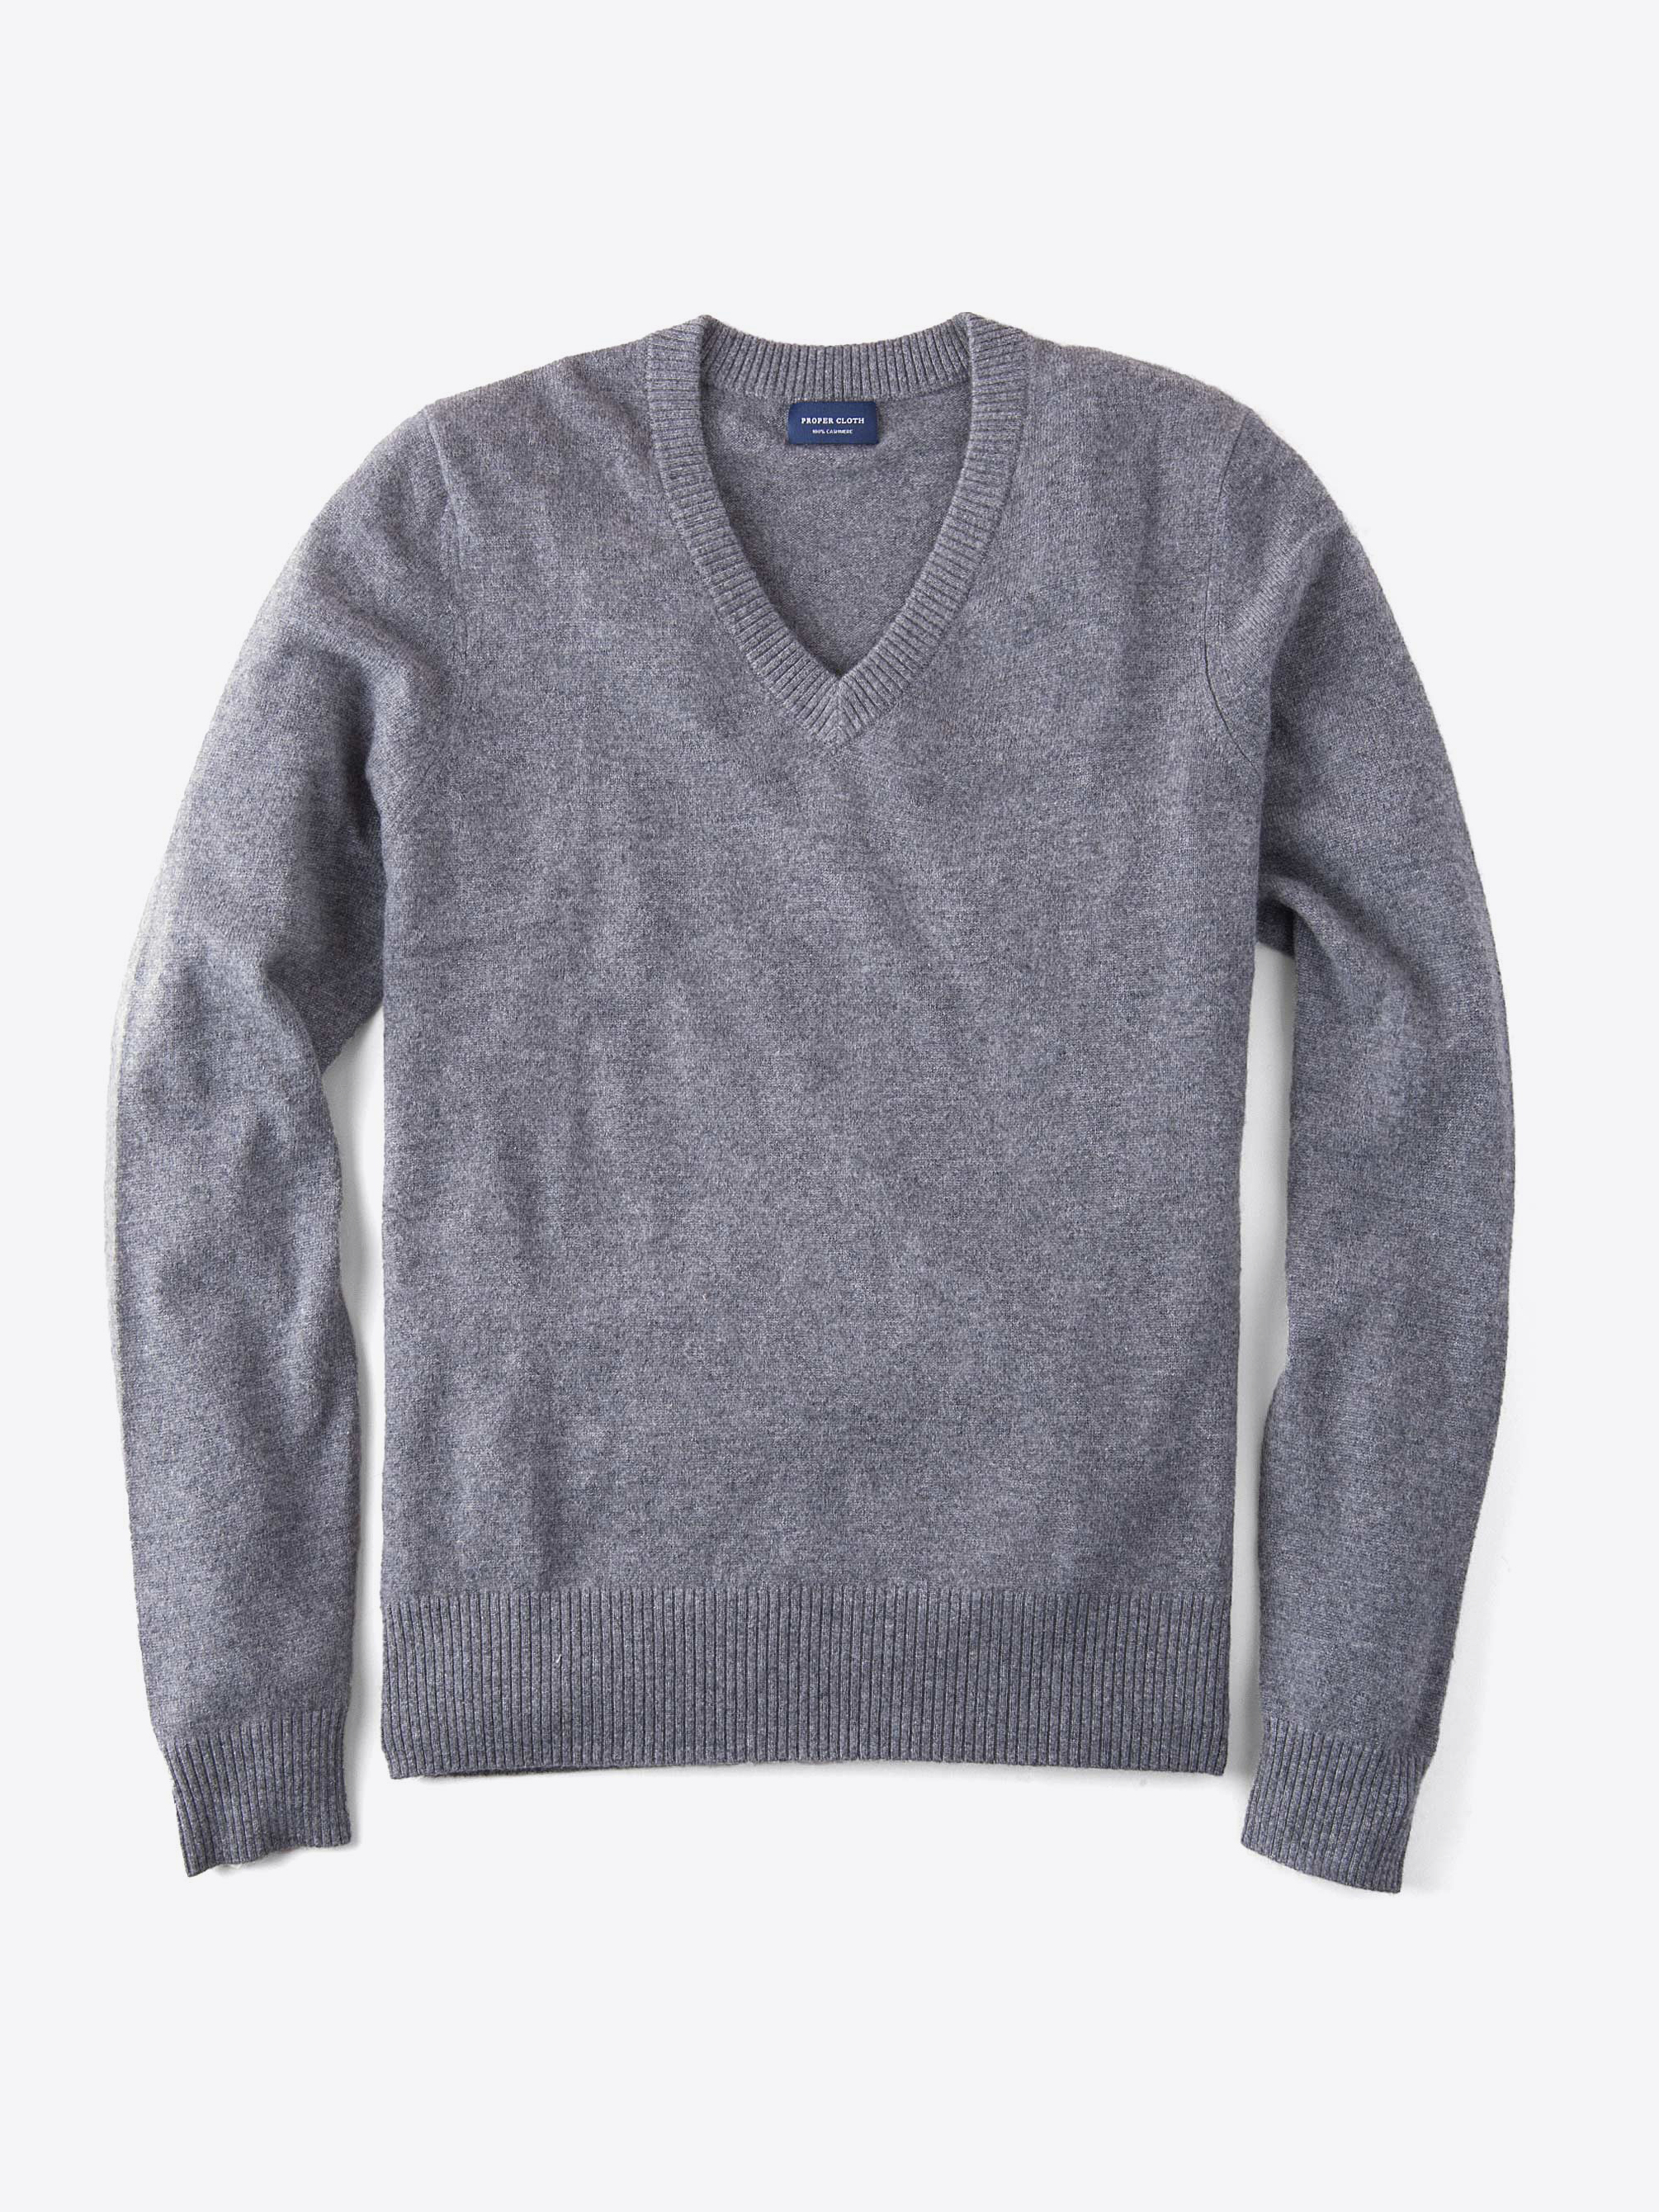 Zoom Image of Grey Cashmere V-Neck Sweater